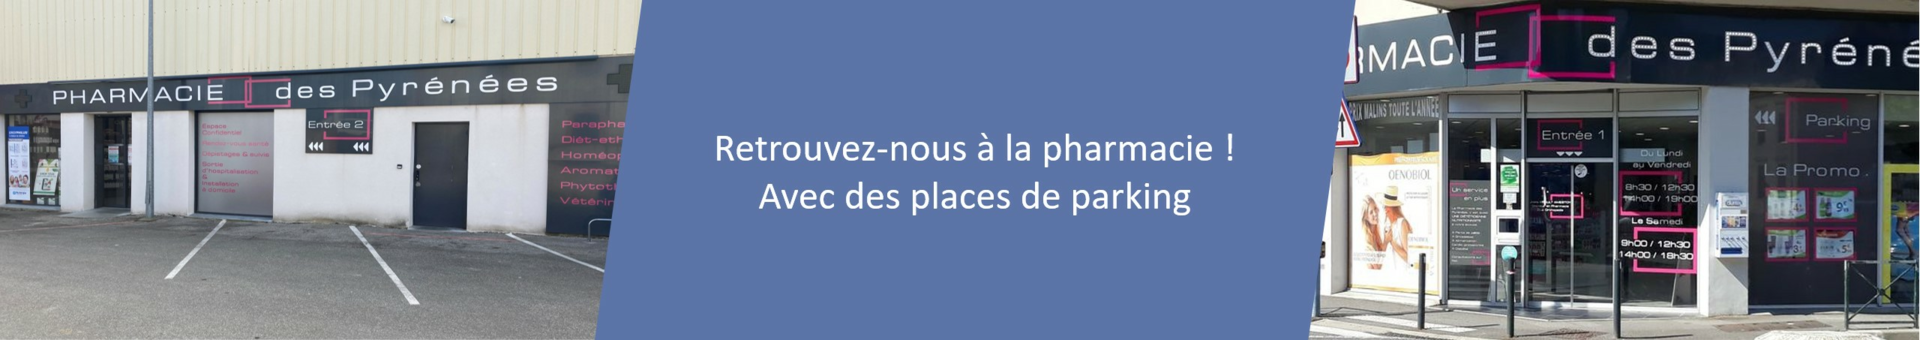 Pharmacie des Pyrénées,Saint-Gaudens